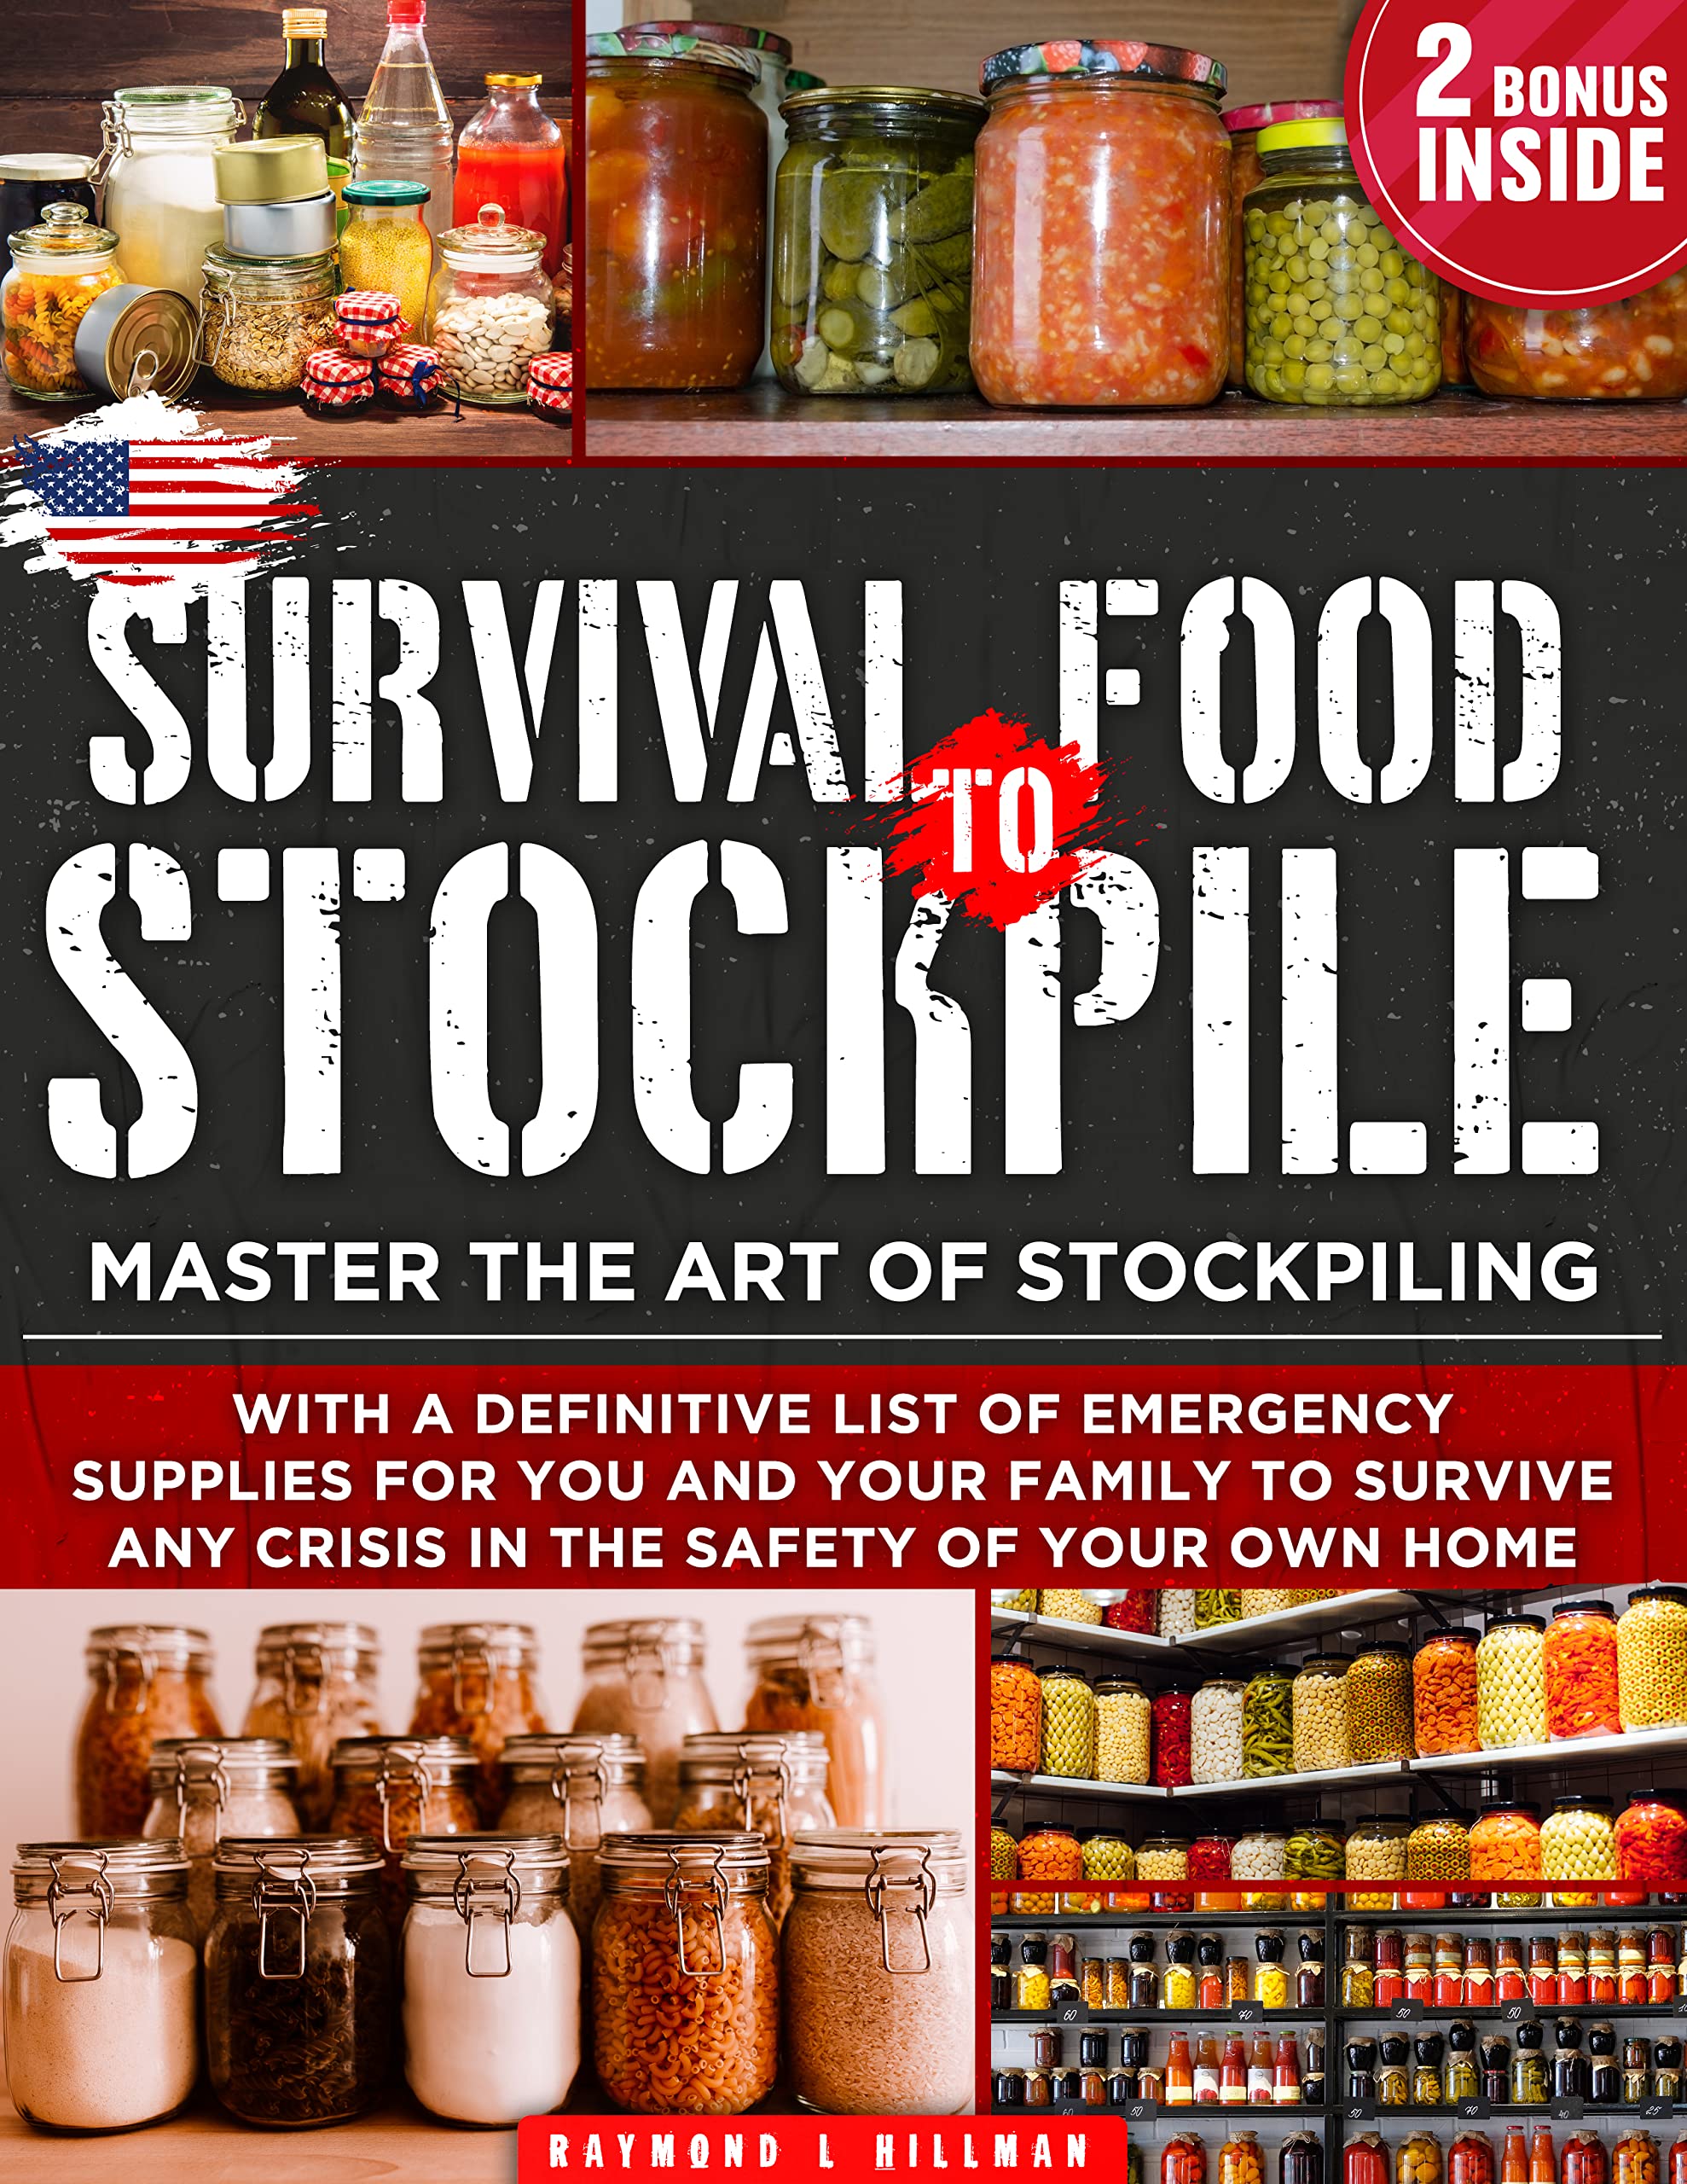 23 Forgotten Emergency Foods to Stockpile - The Wicked Genetics